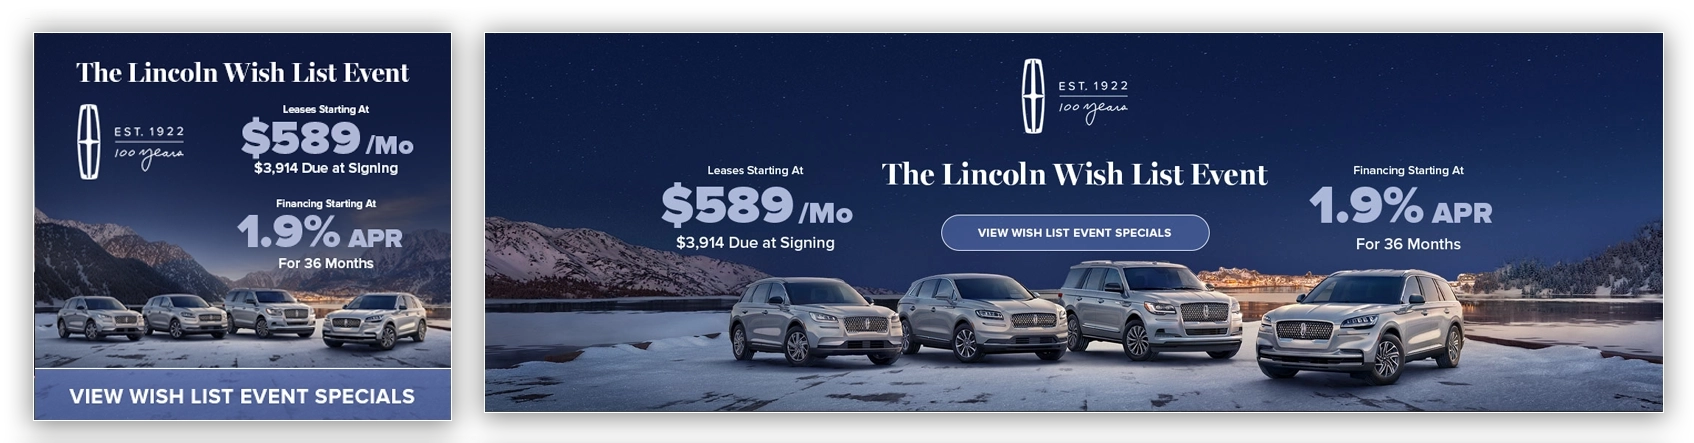 Lincoln Wish List Event mobile and desktop slides